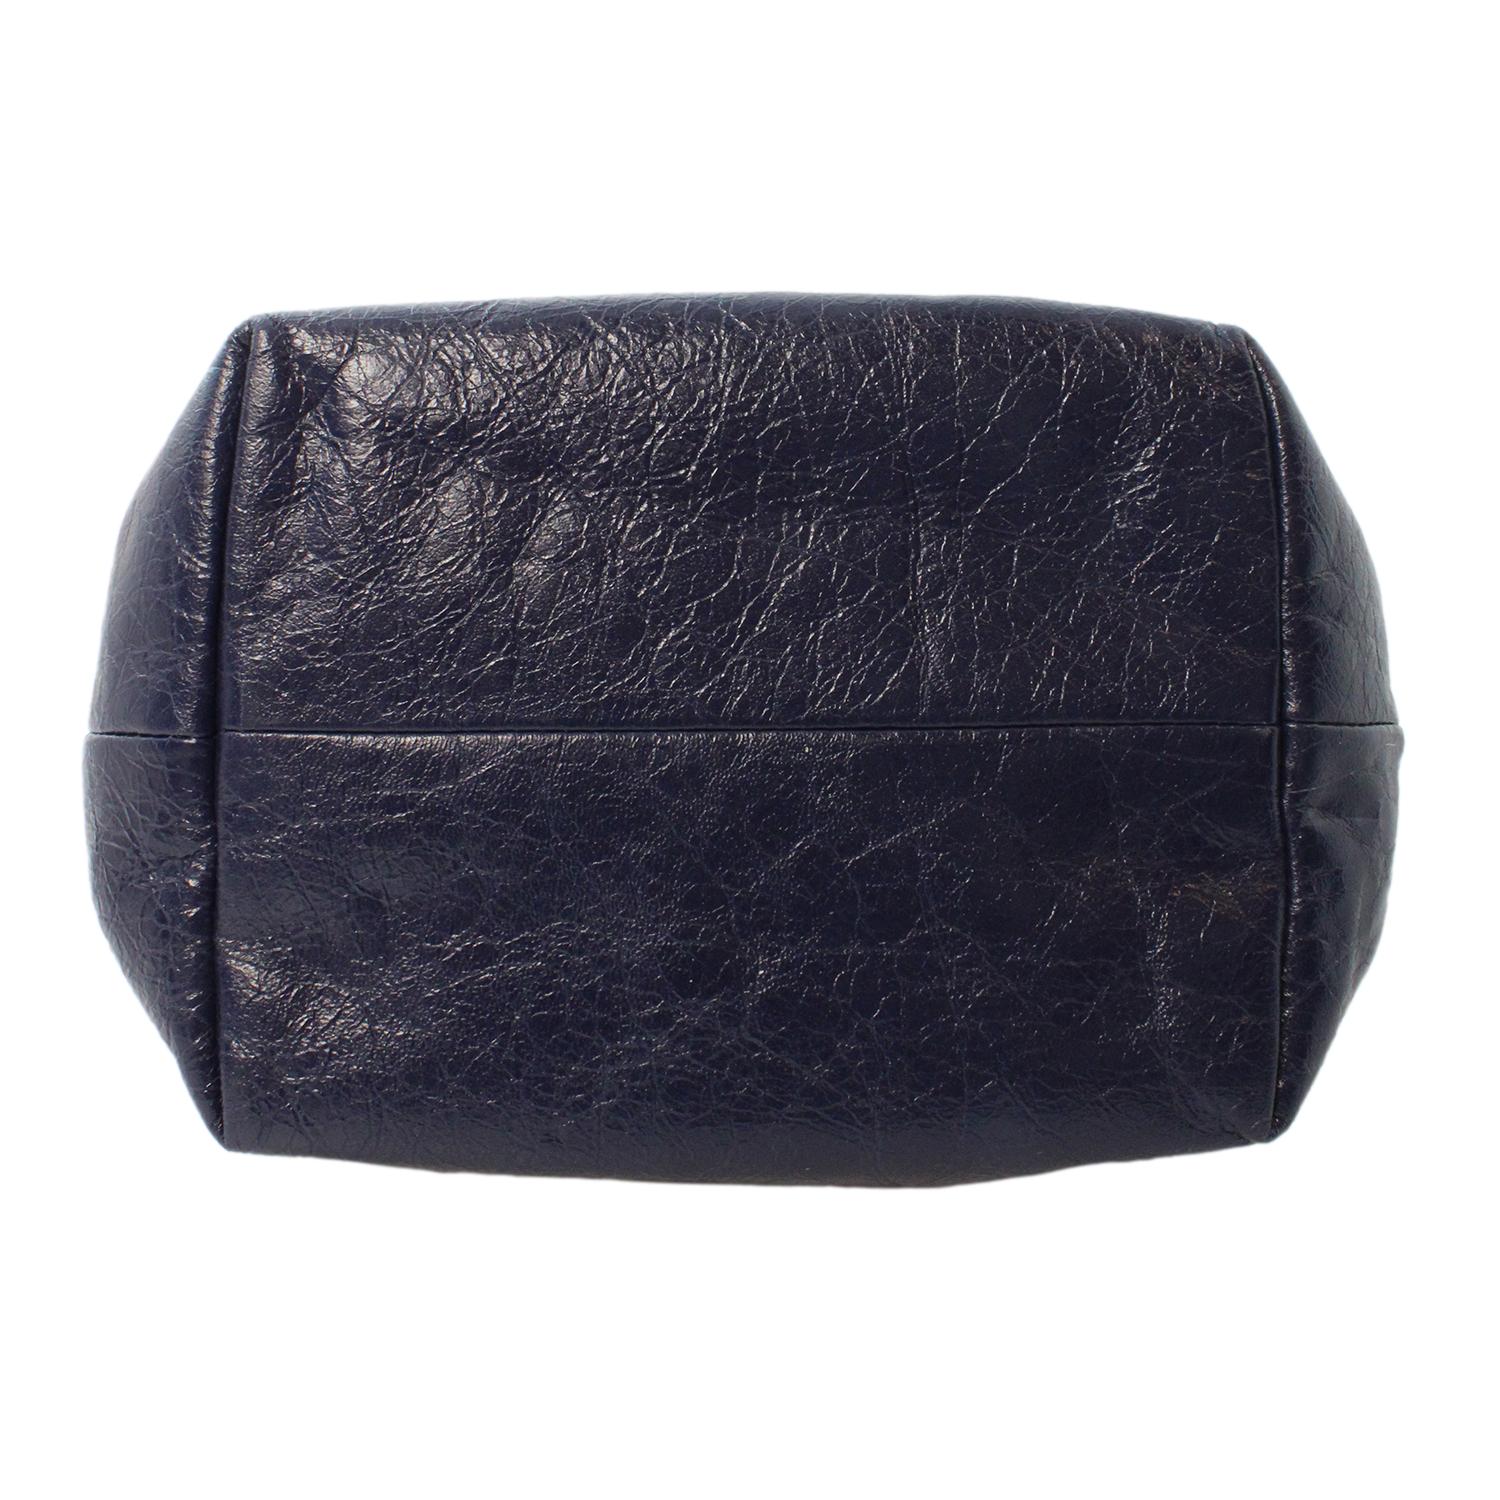 Balenciaga Arena Blue Lambskin Leather Flap Messenger Bag 620259